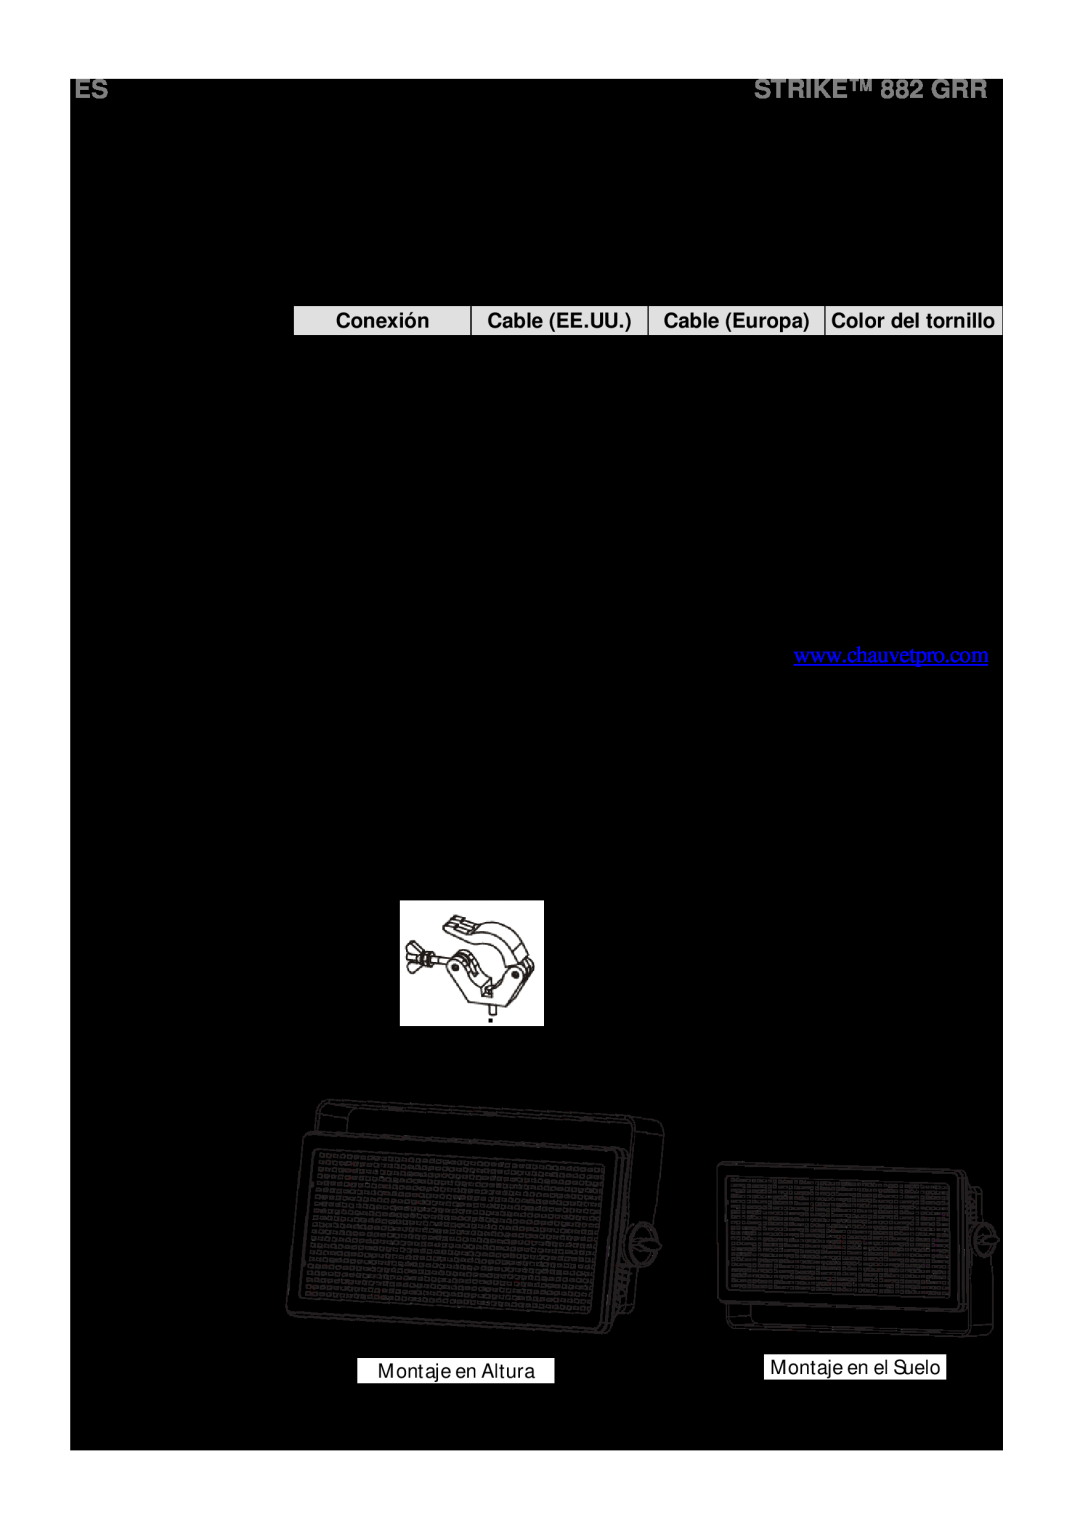 Chauvet CLP-15 manual Montaje, Enchufe CA, Sustitución del, Fusible, STRIKE 882 GRR 